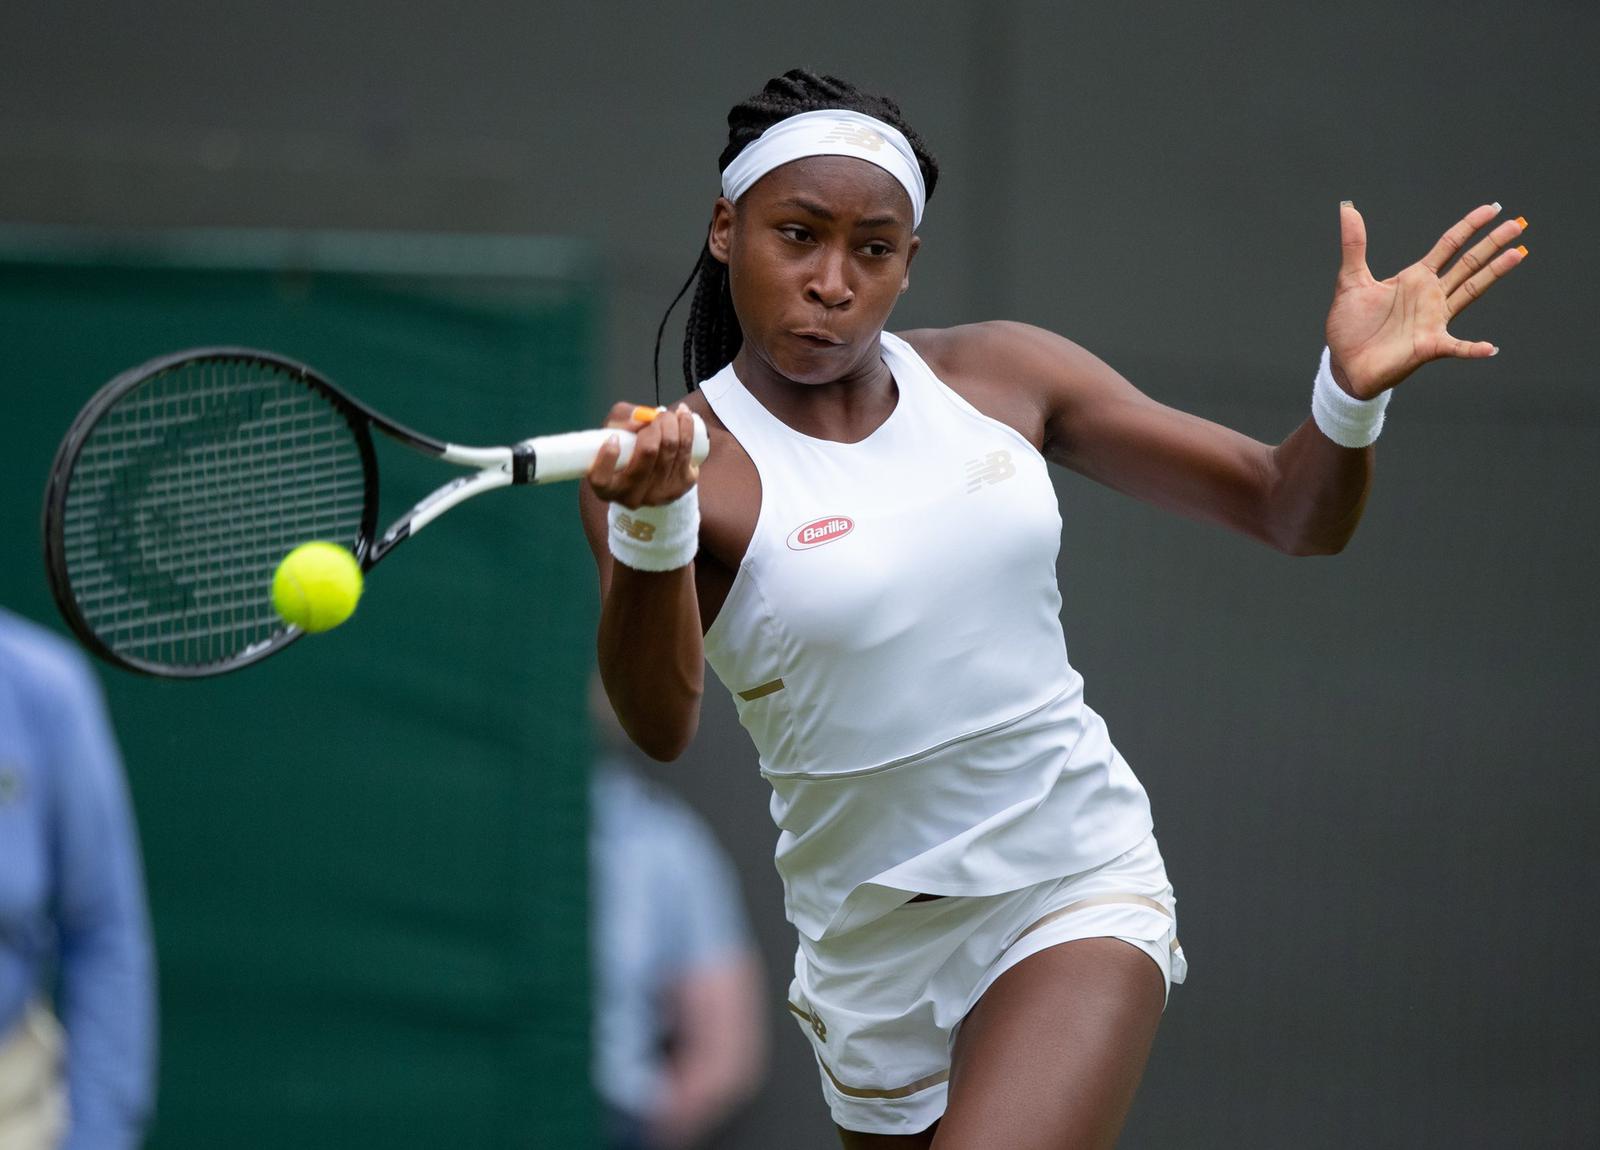 Tennis-Teenager Gauff backs up Venus win to reach third round